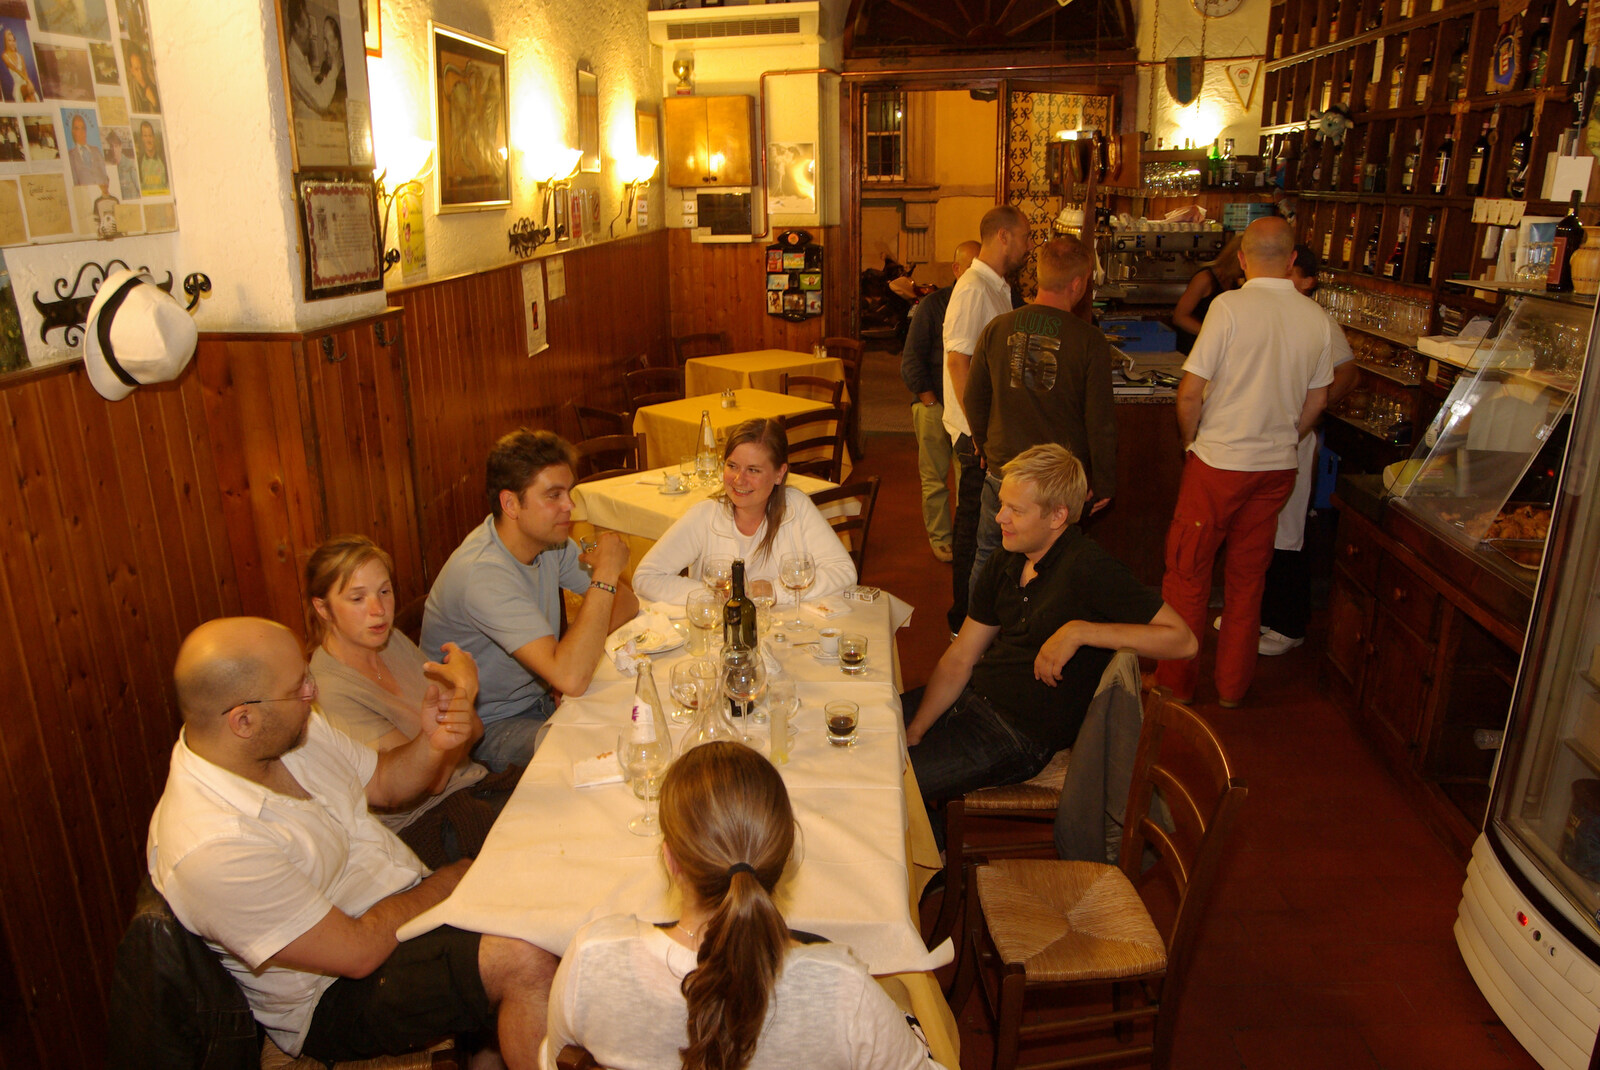 Scenes from an Italian Restaurant from Tenuta Il Palazzo in Arezzo, Tuscany, Italy - 22nd July 2008